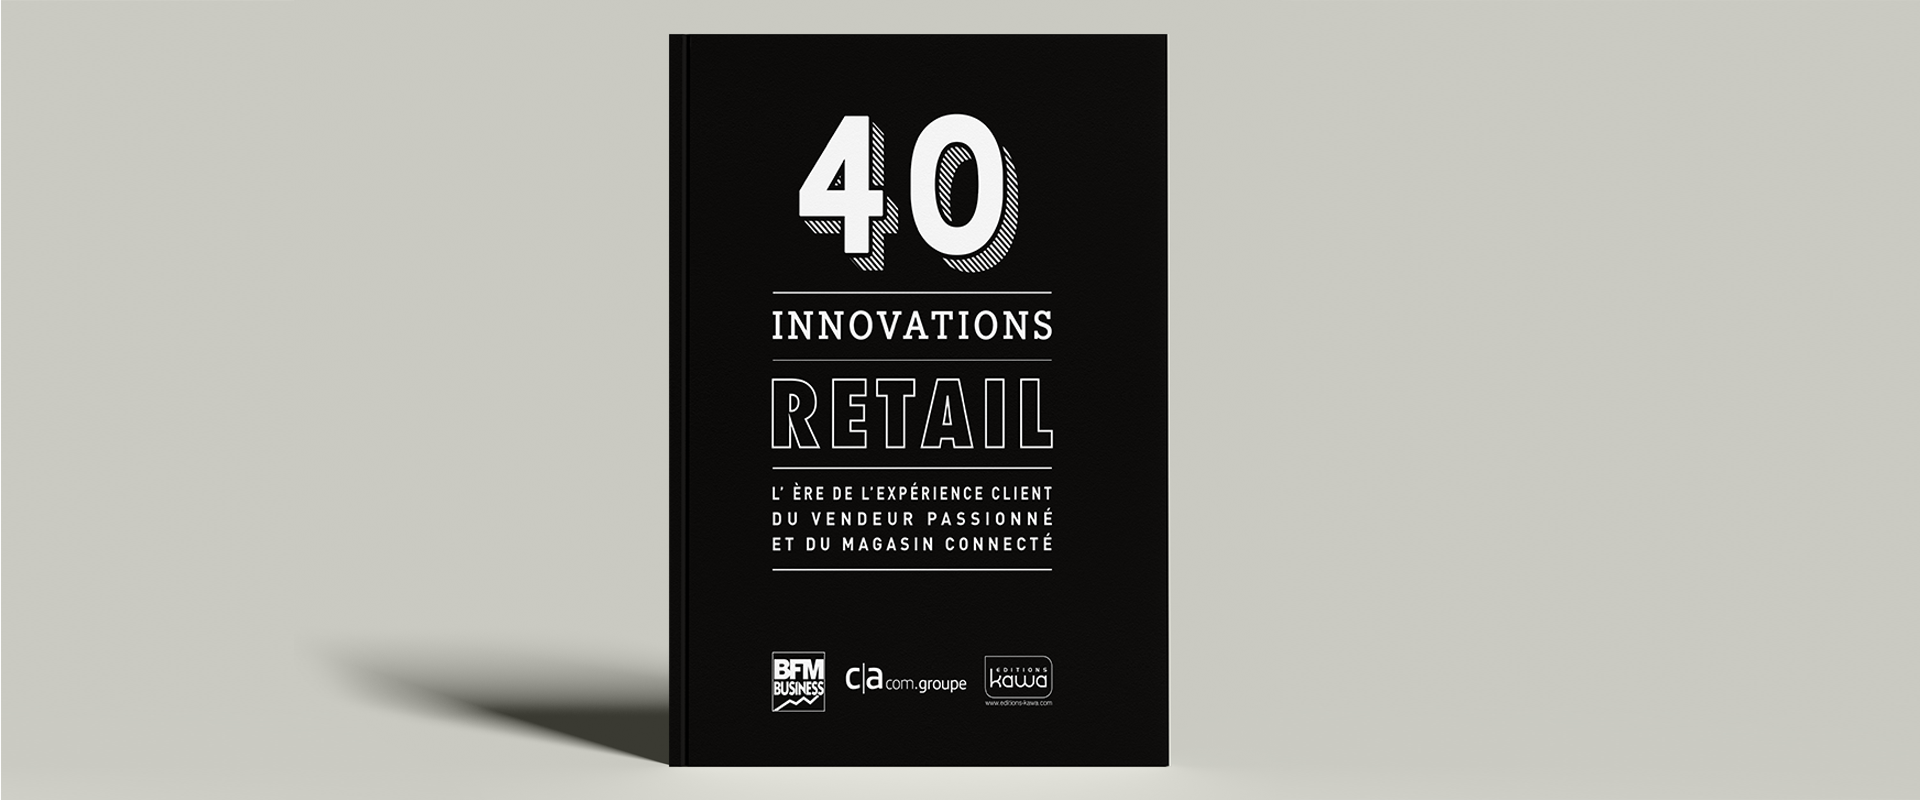 40 innovations retail N°1